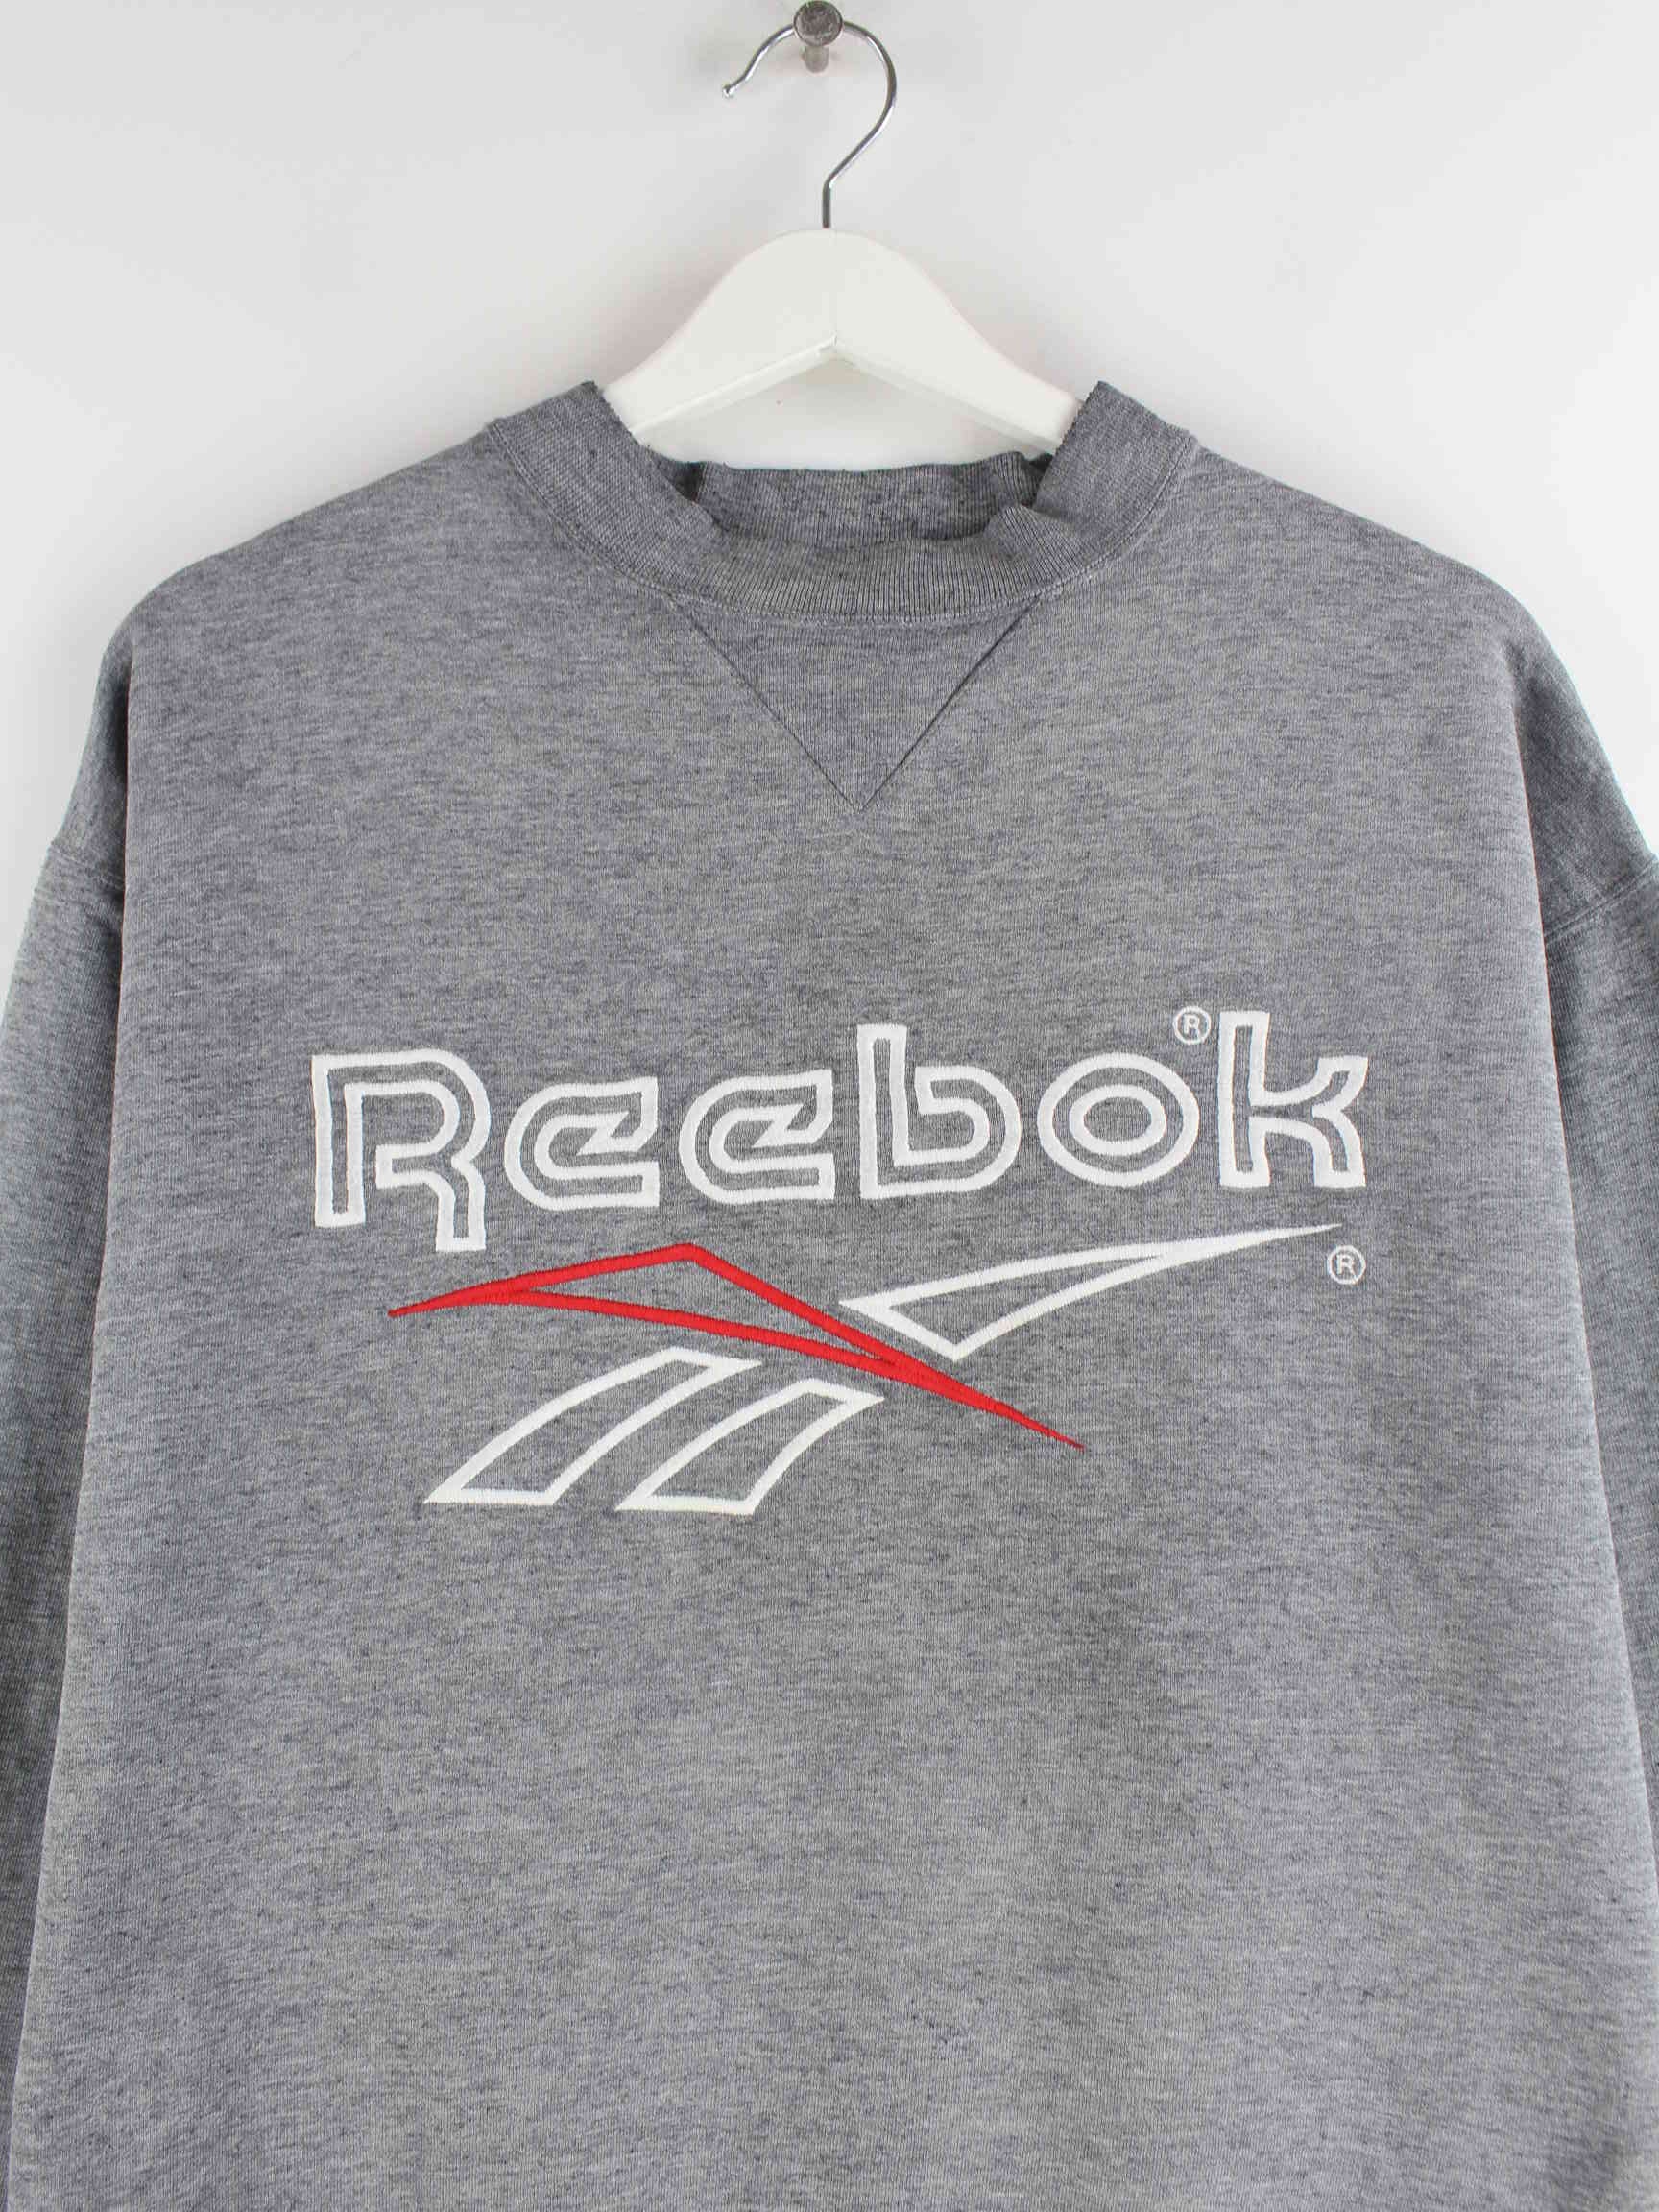 Reebok 90s Vintage Embroidered Sweater Grau S (detail image 1)